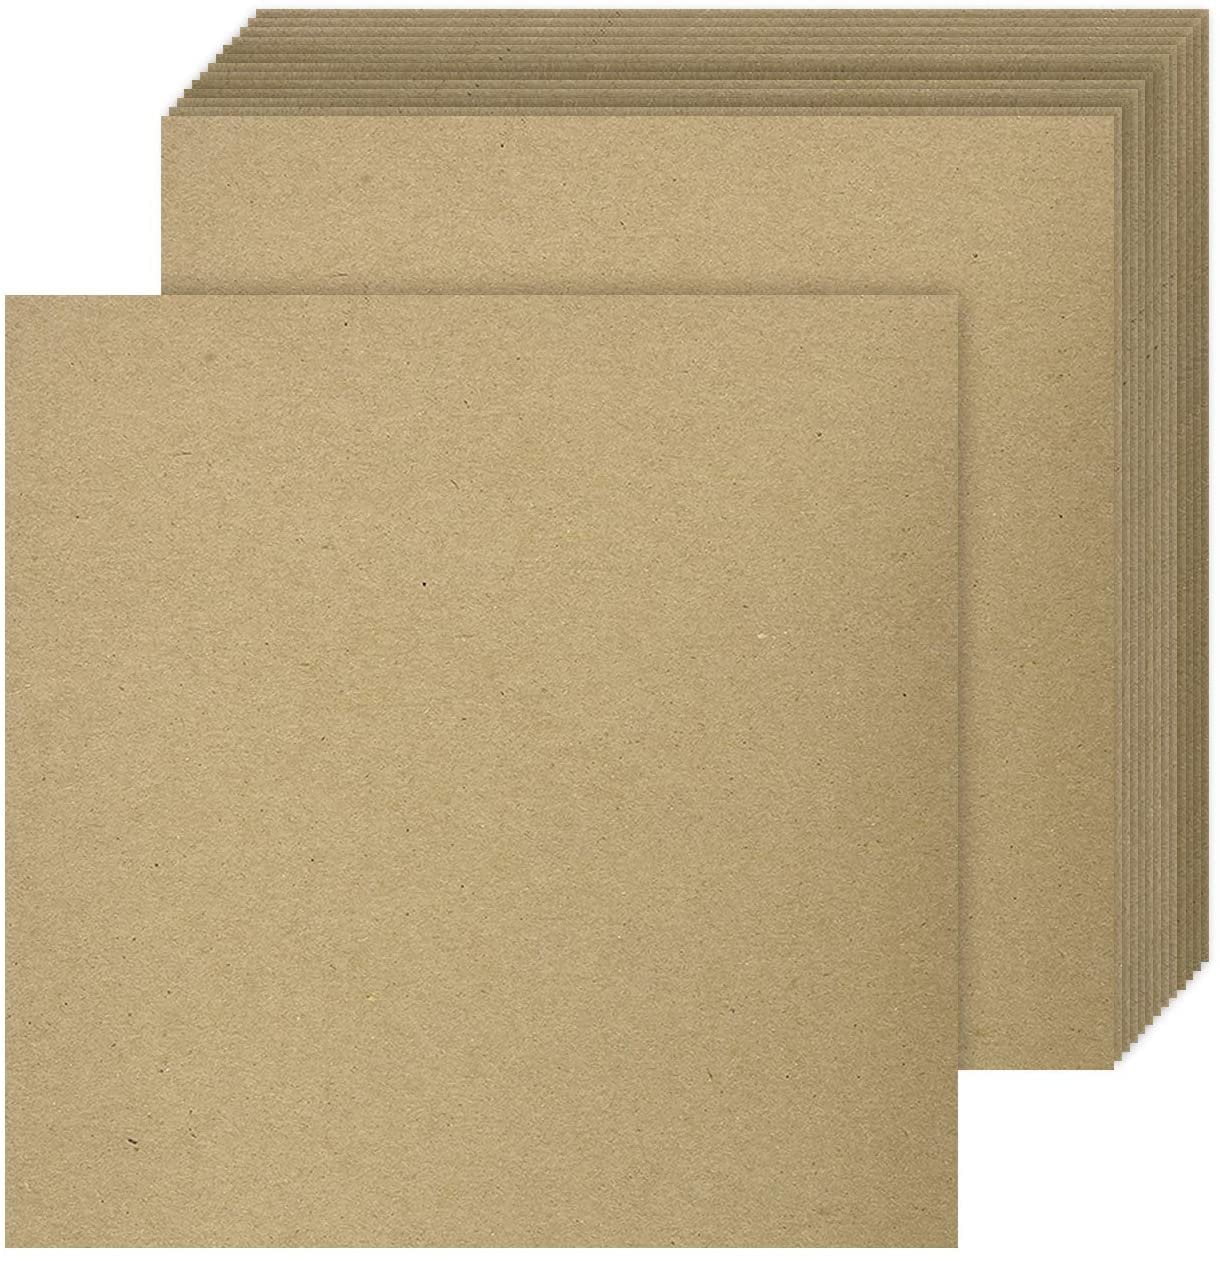 100 Sheets Chipboard 9 x 12 inch 30pt Medium Weight Brown Kraft Cardboard 